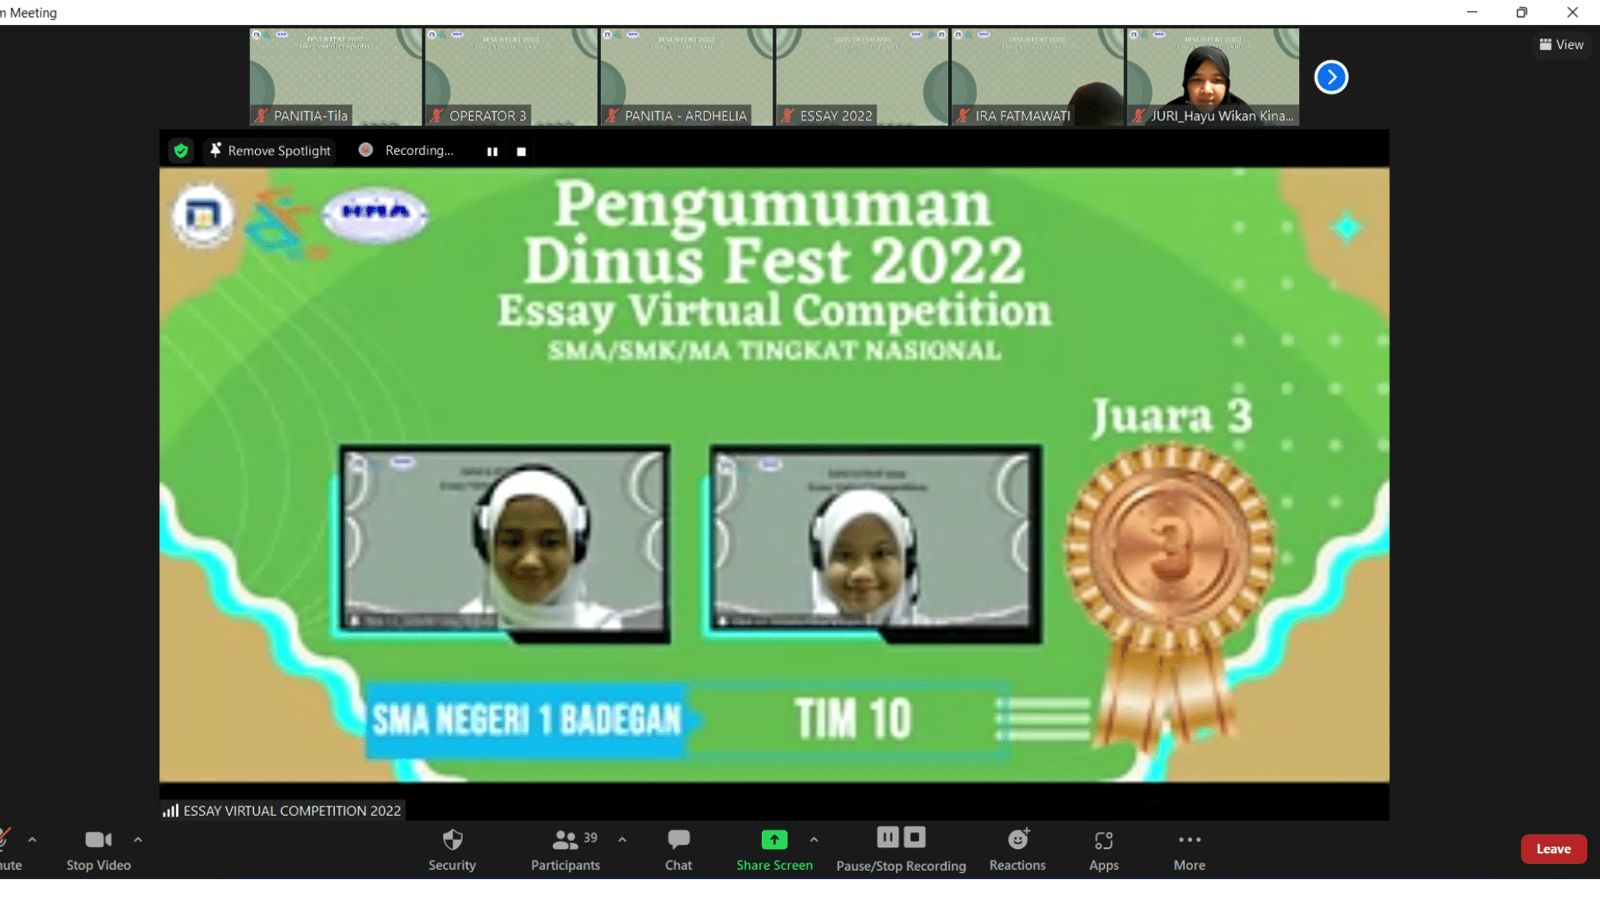 Juara 3 Essay Virtual Competition